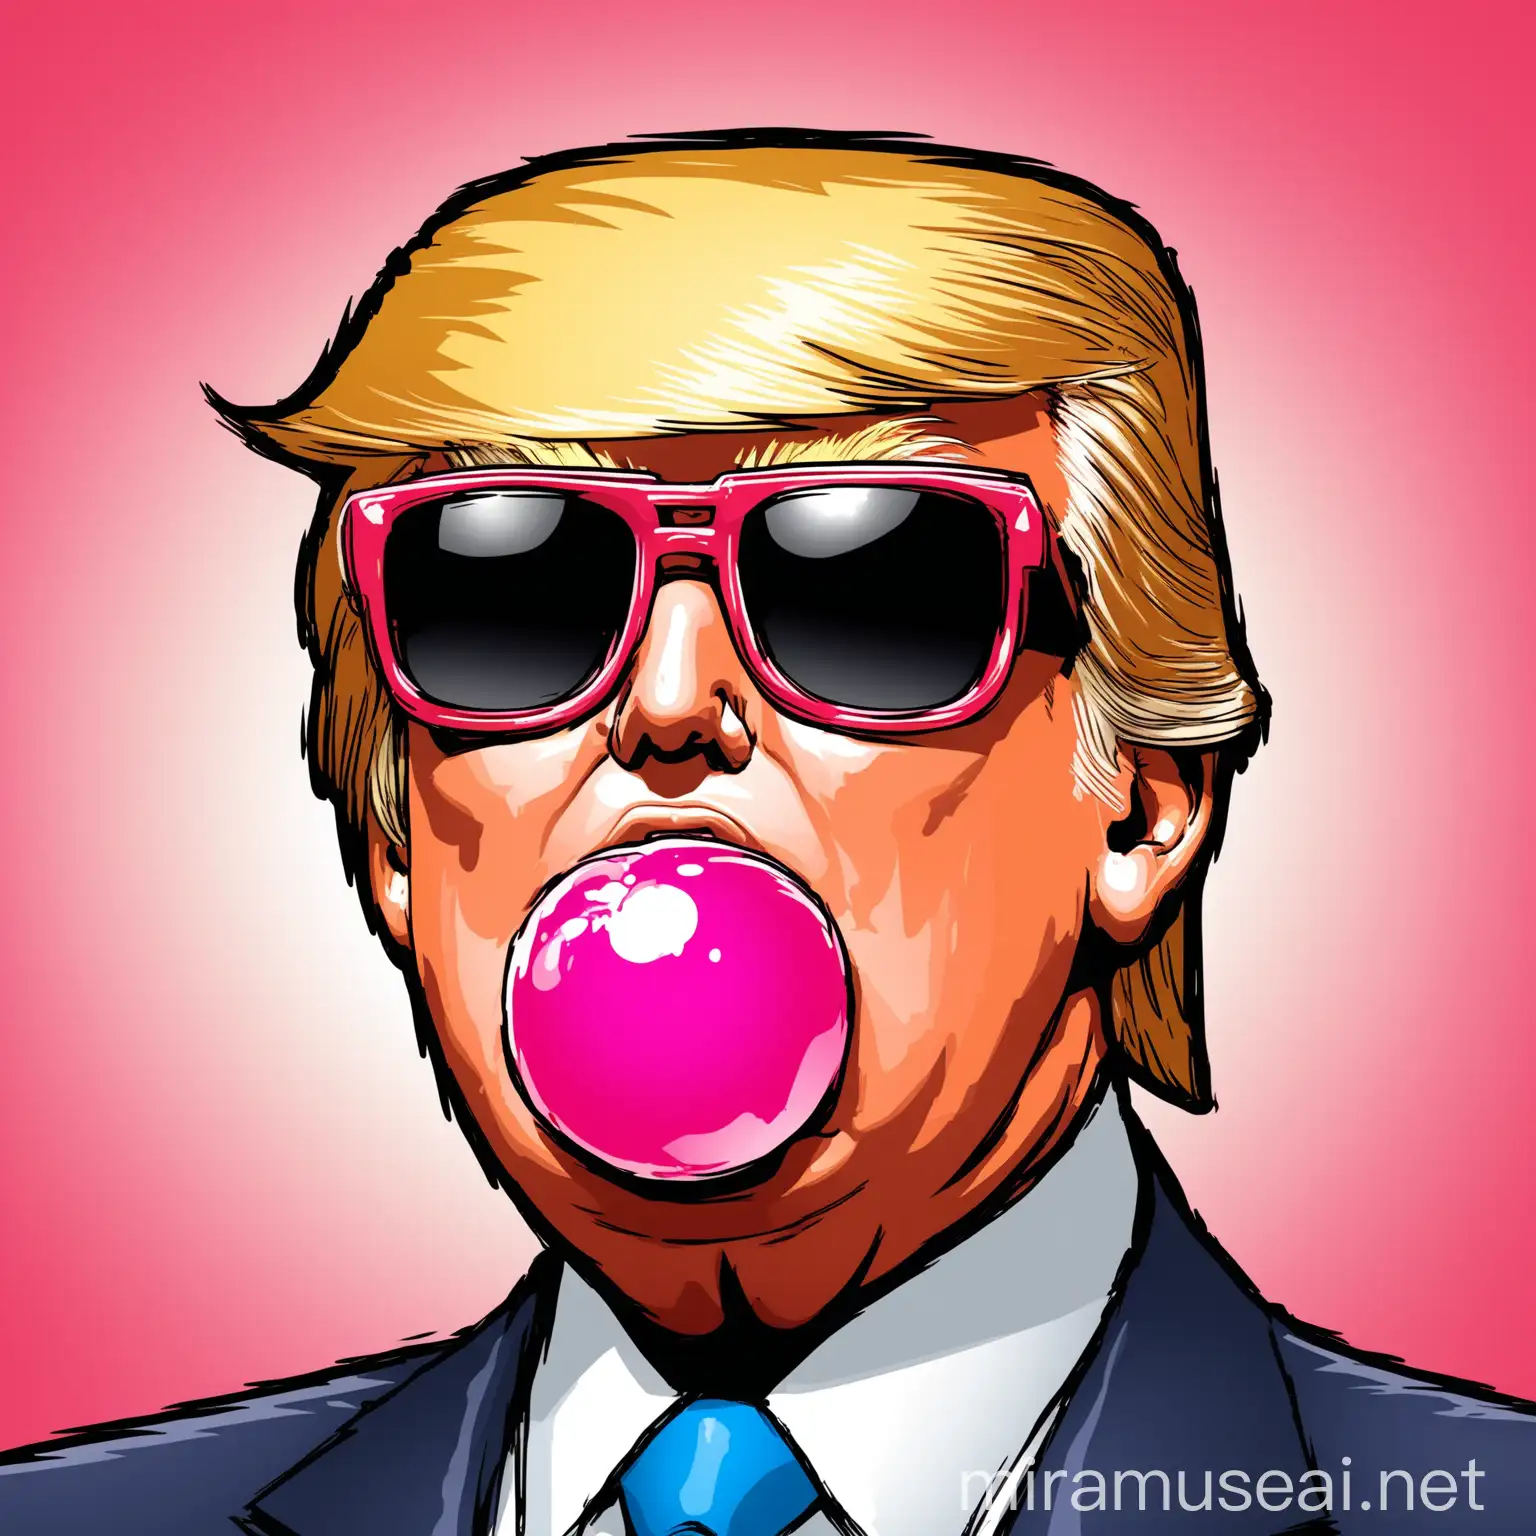 Donald Trump Wearing Sunglasses Blowing Bubblegum